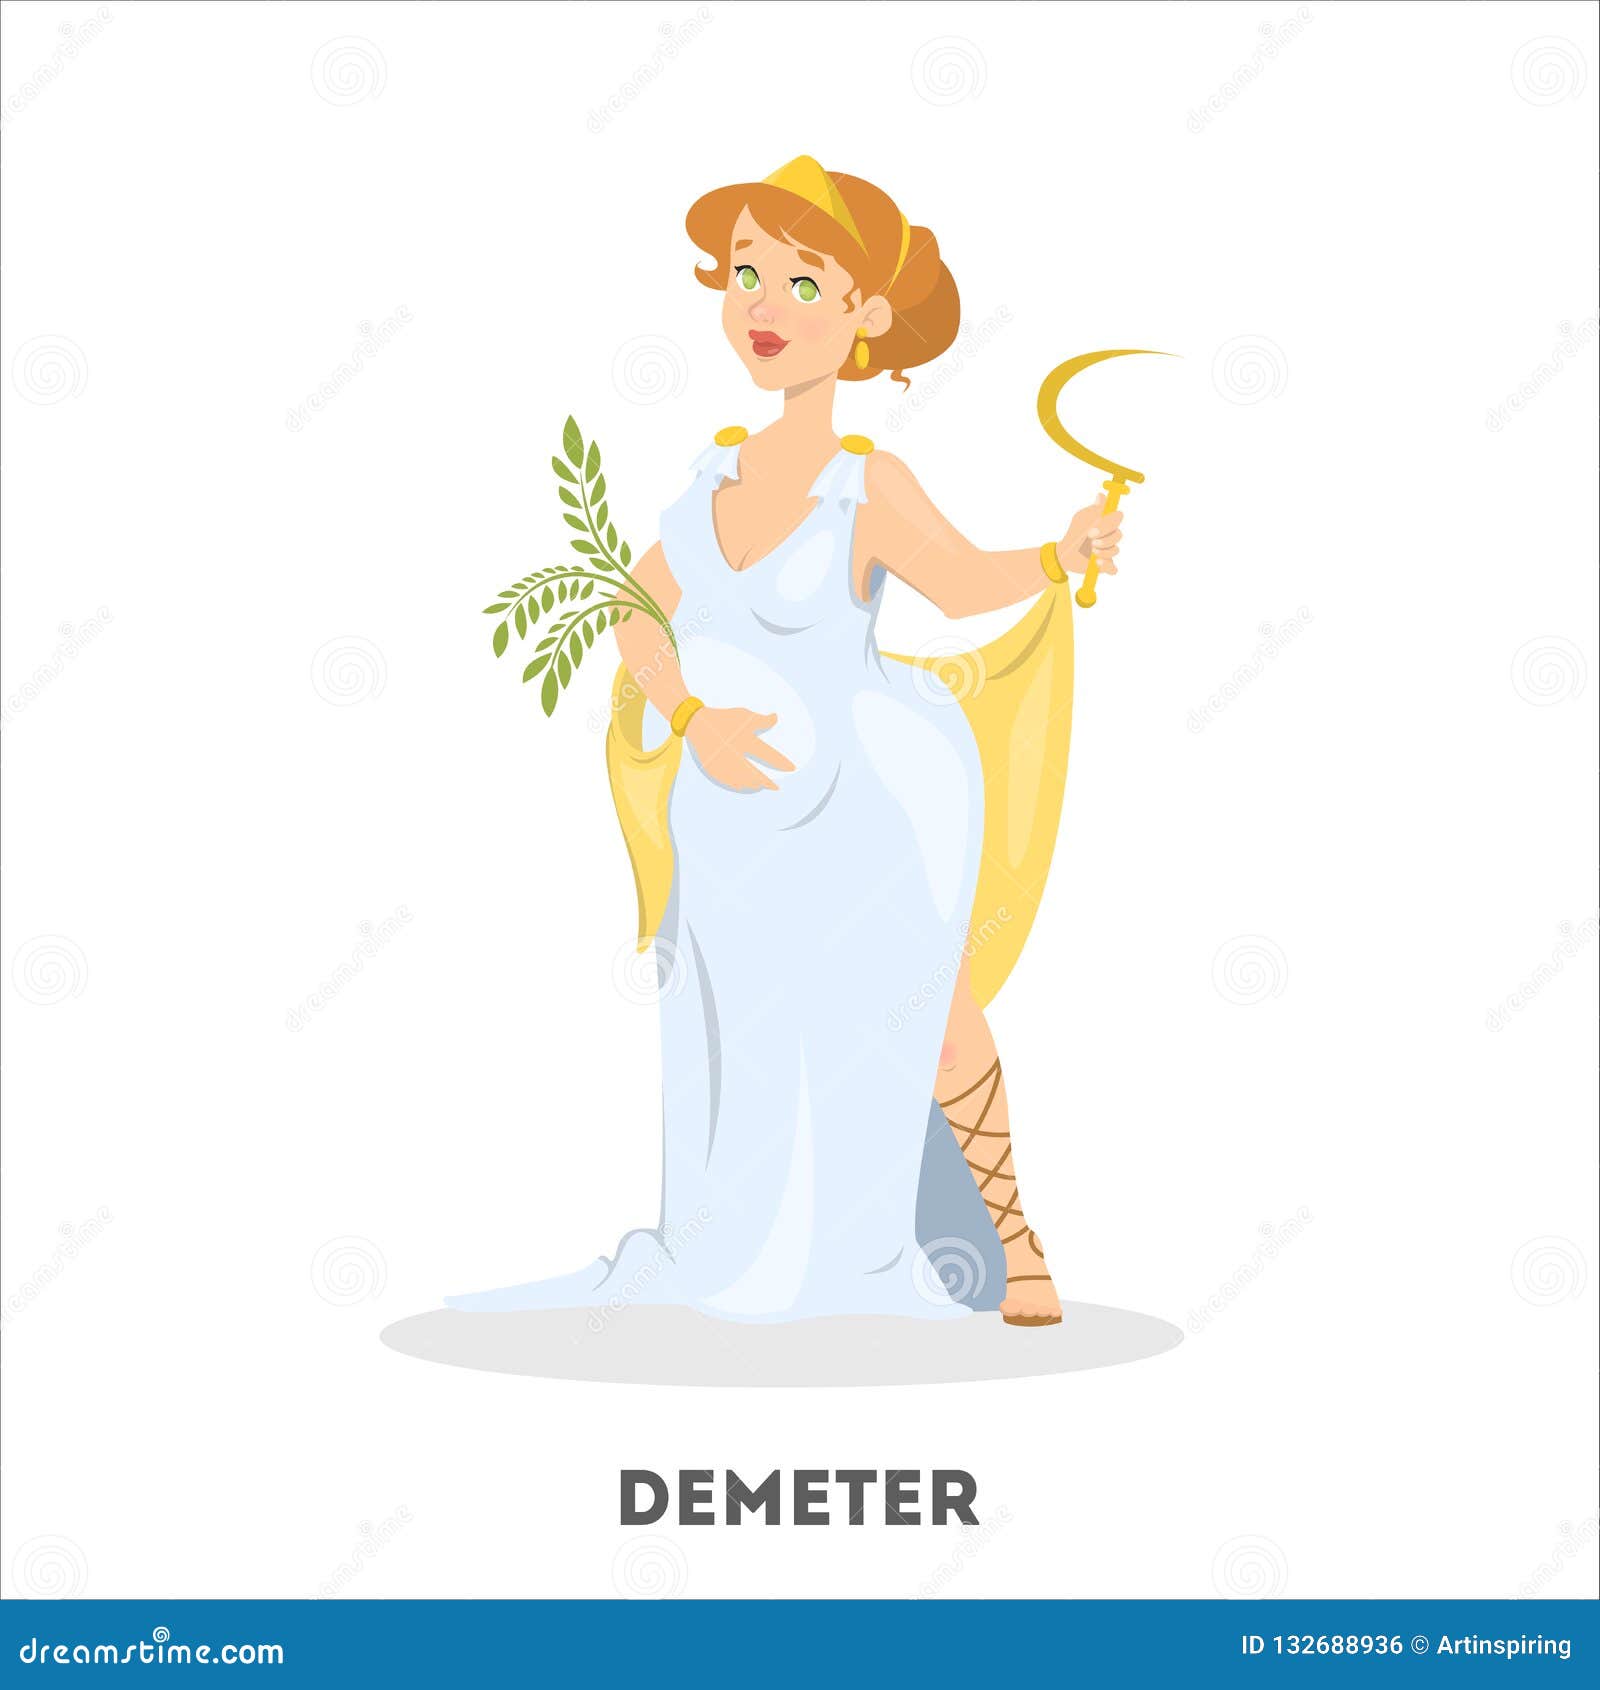 demeter goddess greek mythology ancient female character illustration vector